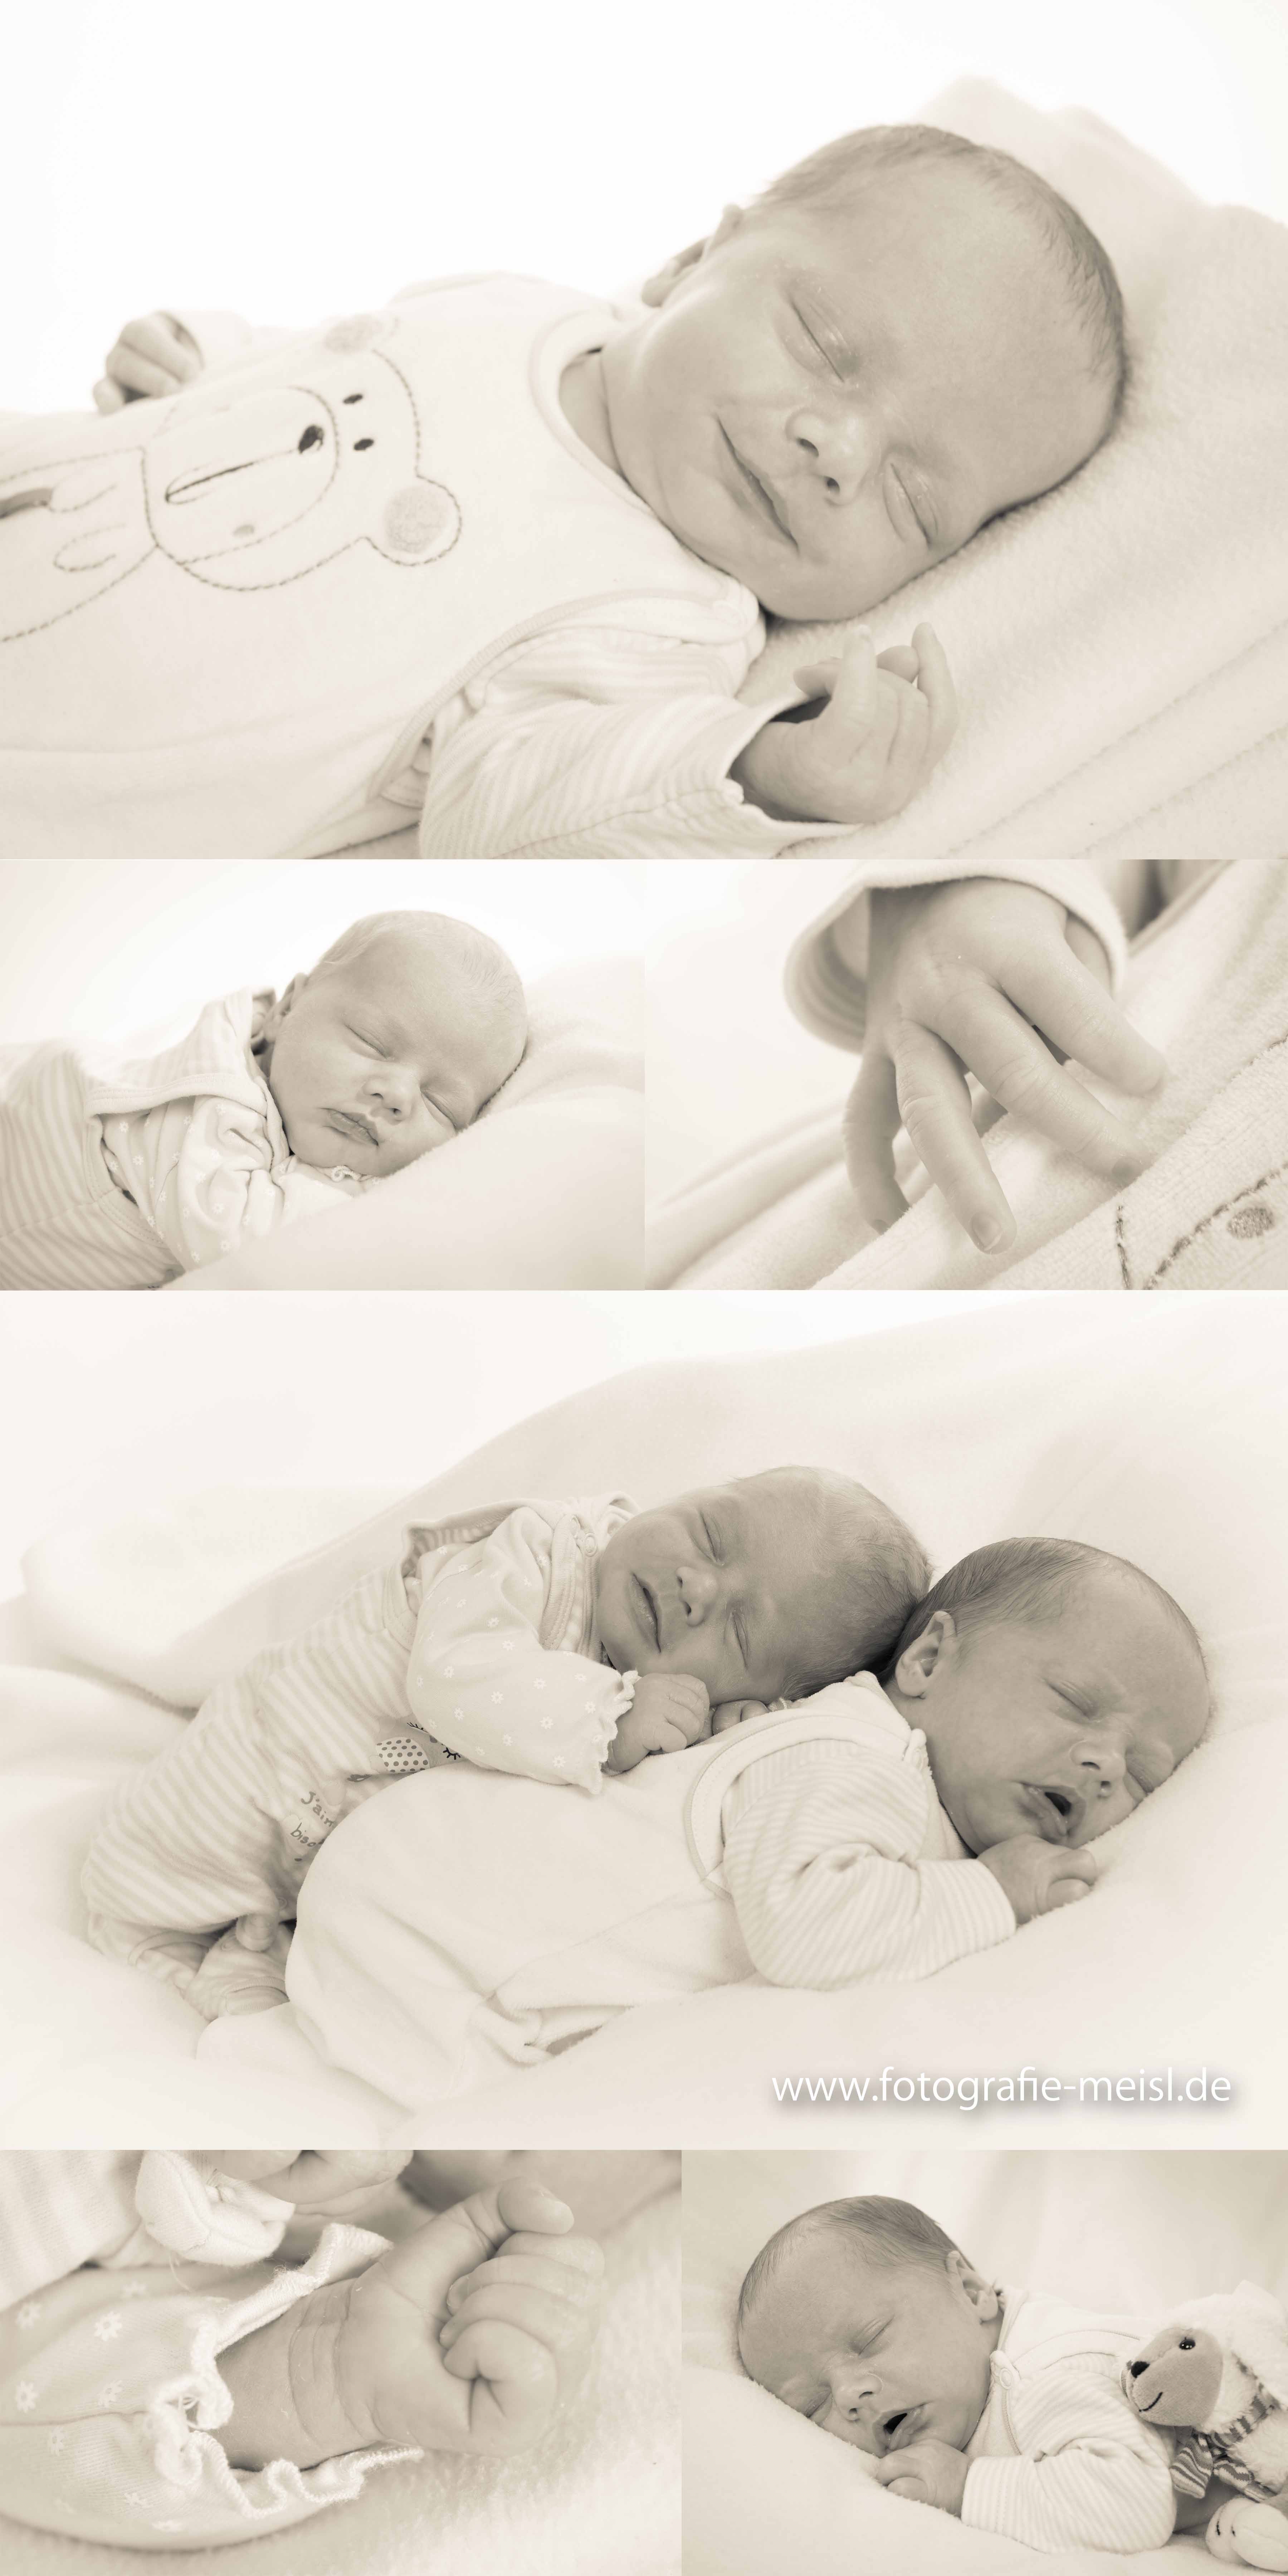 Baby-Zwillinge_Fotografie-Meisl